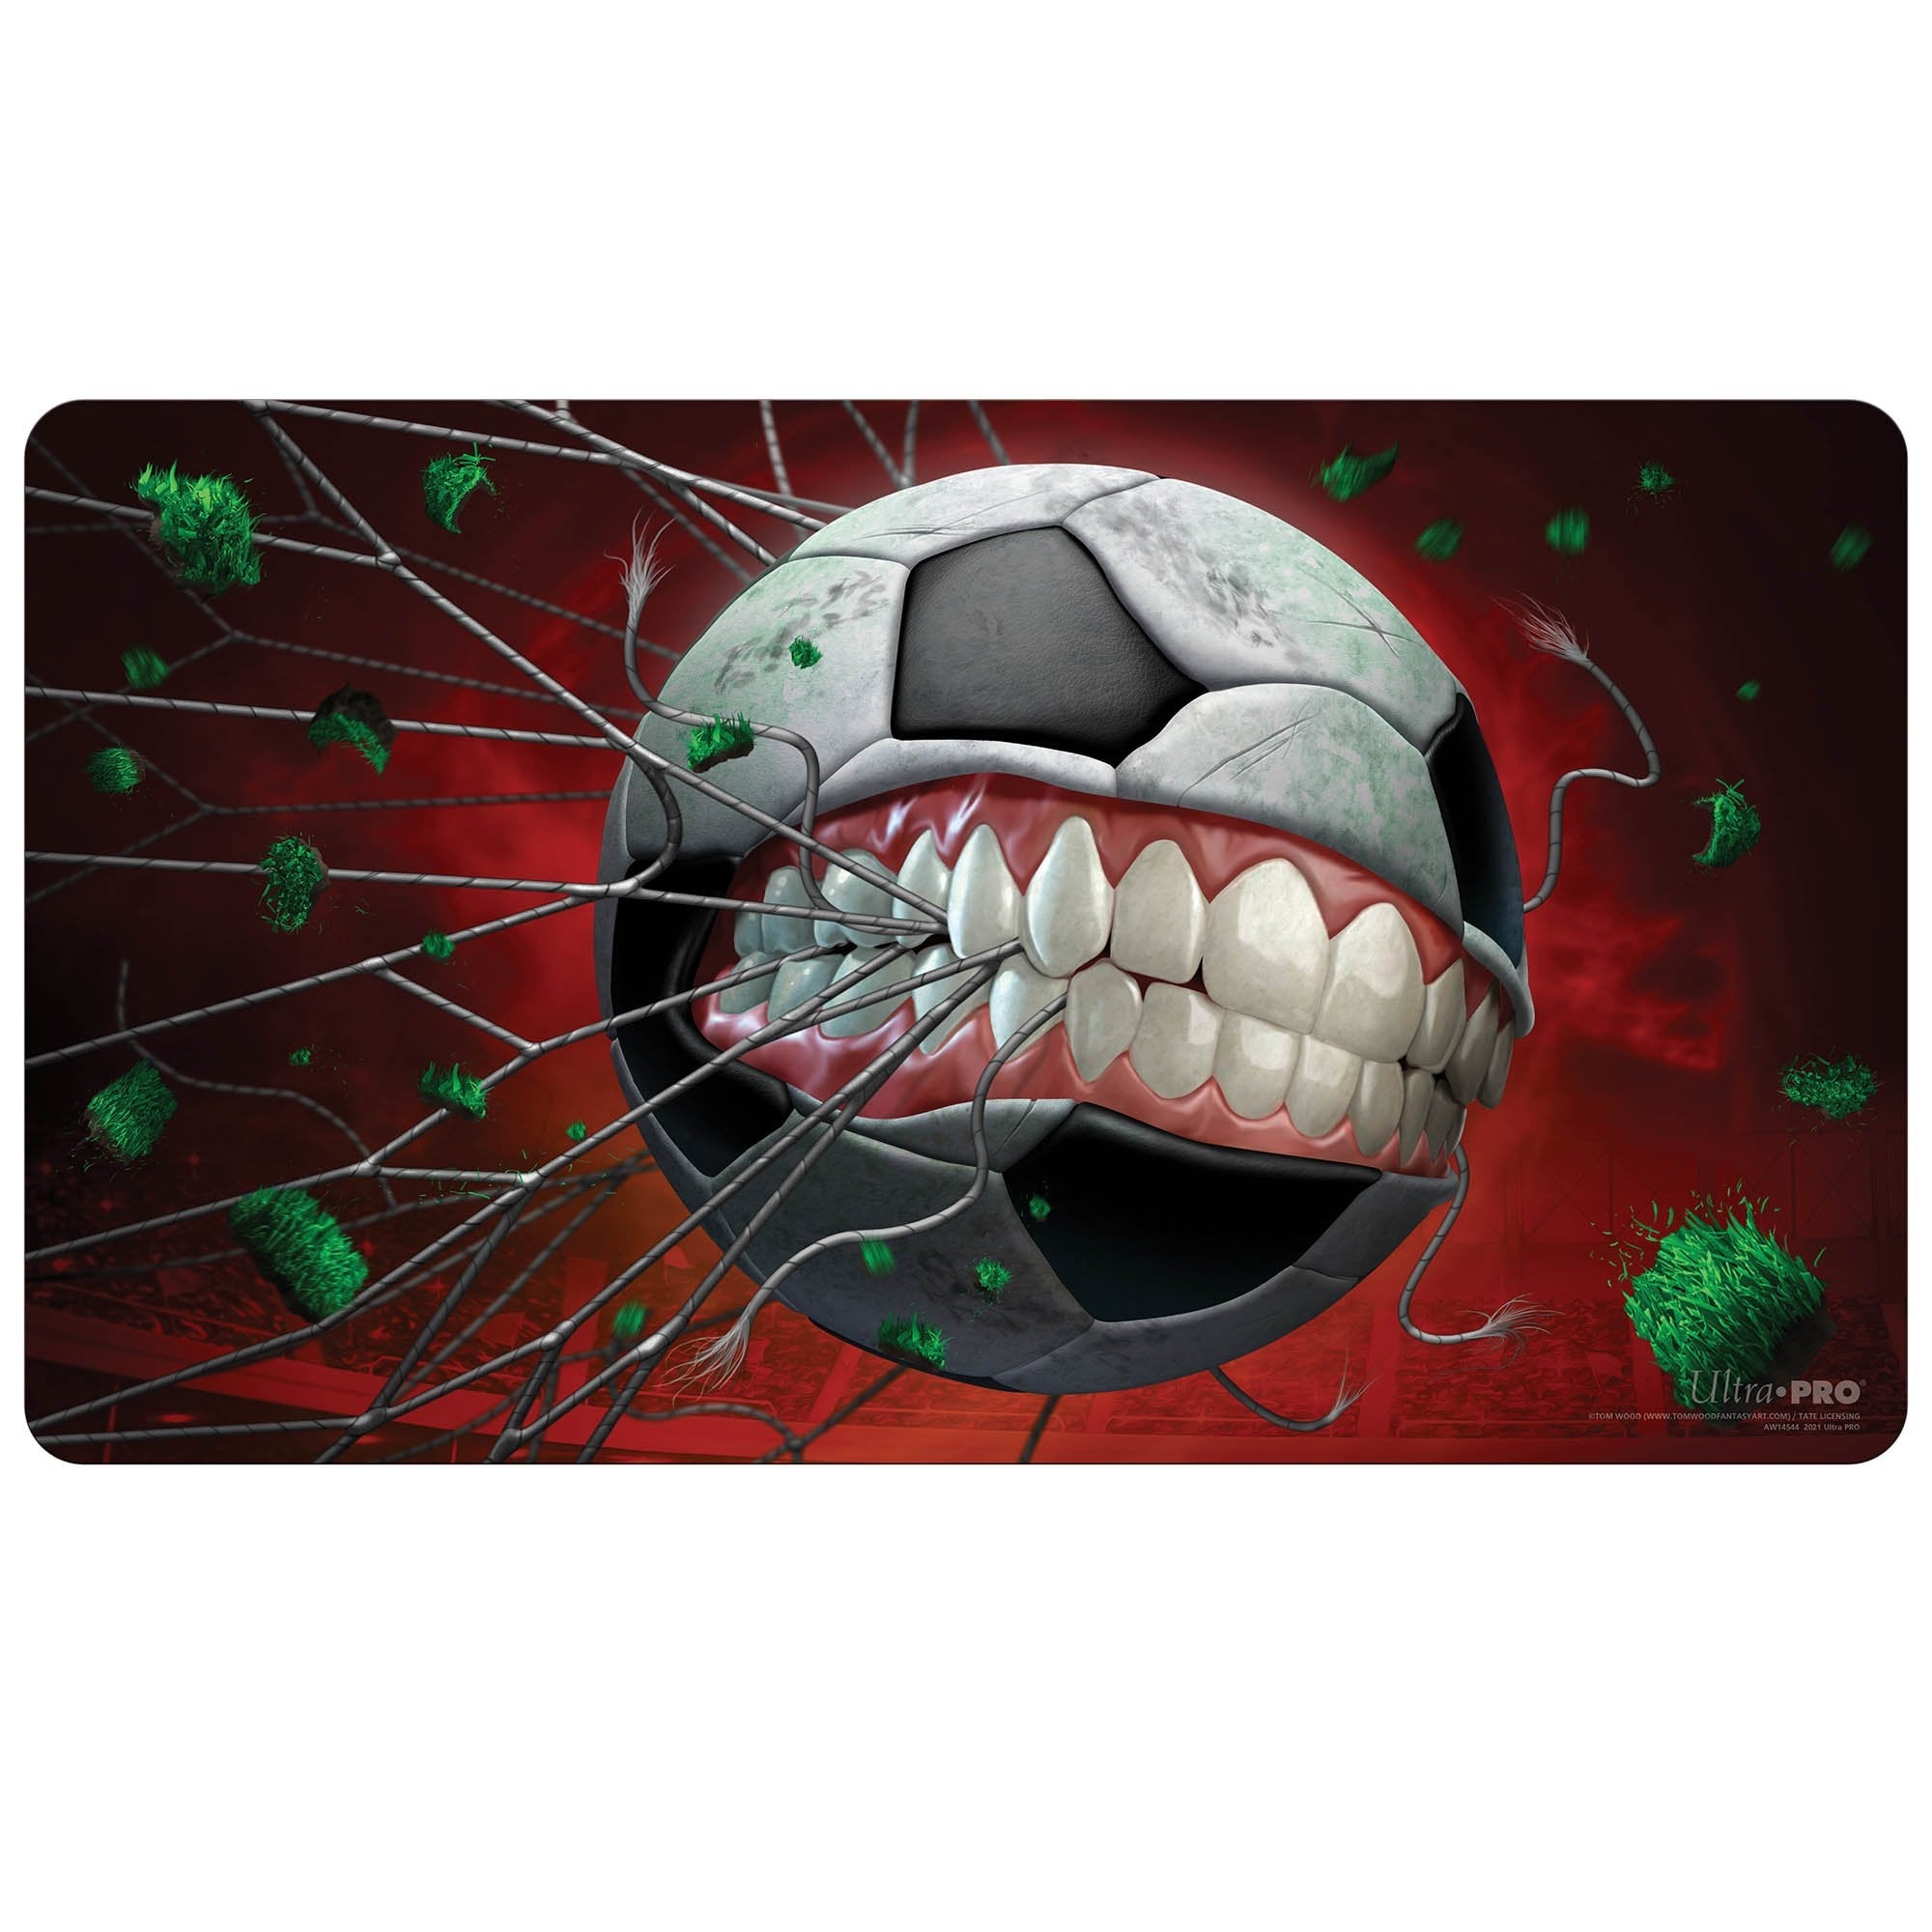 Ultra Pro "Sports Monster Soccer" Playmat | Eastridge Sports Cards